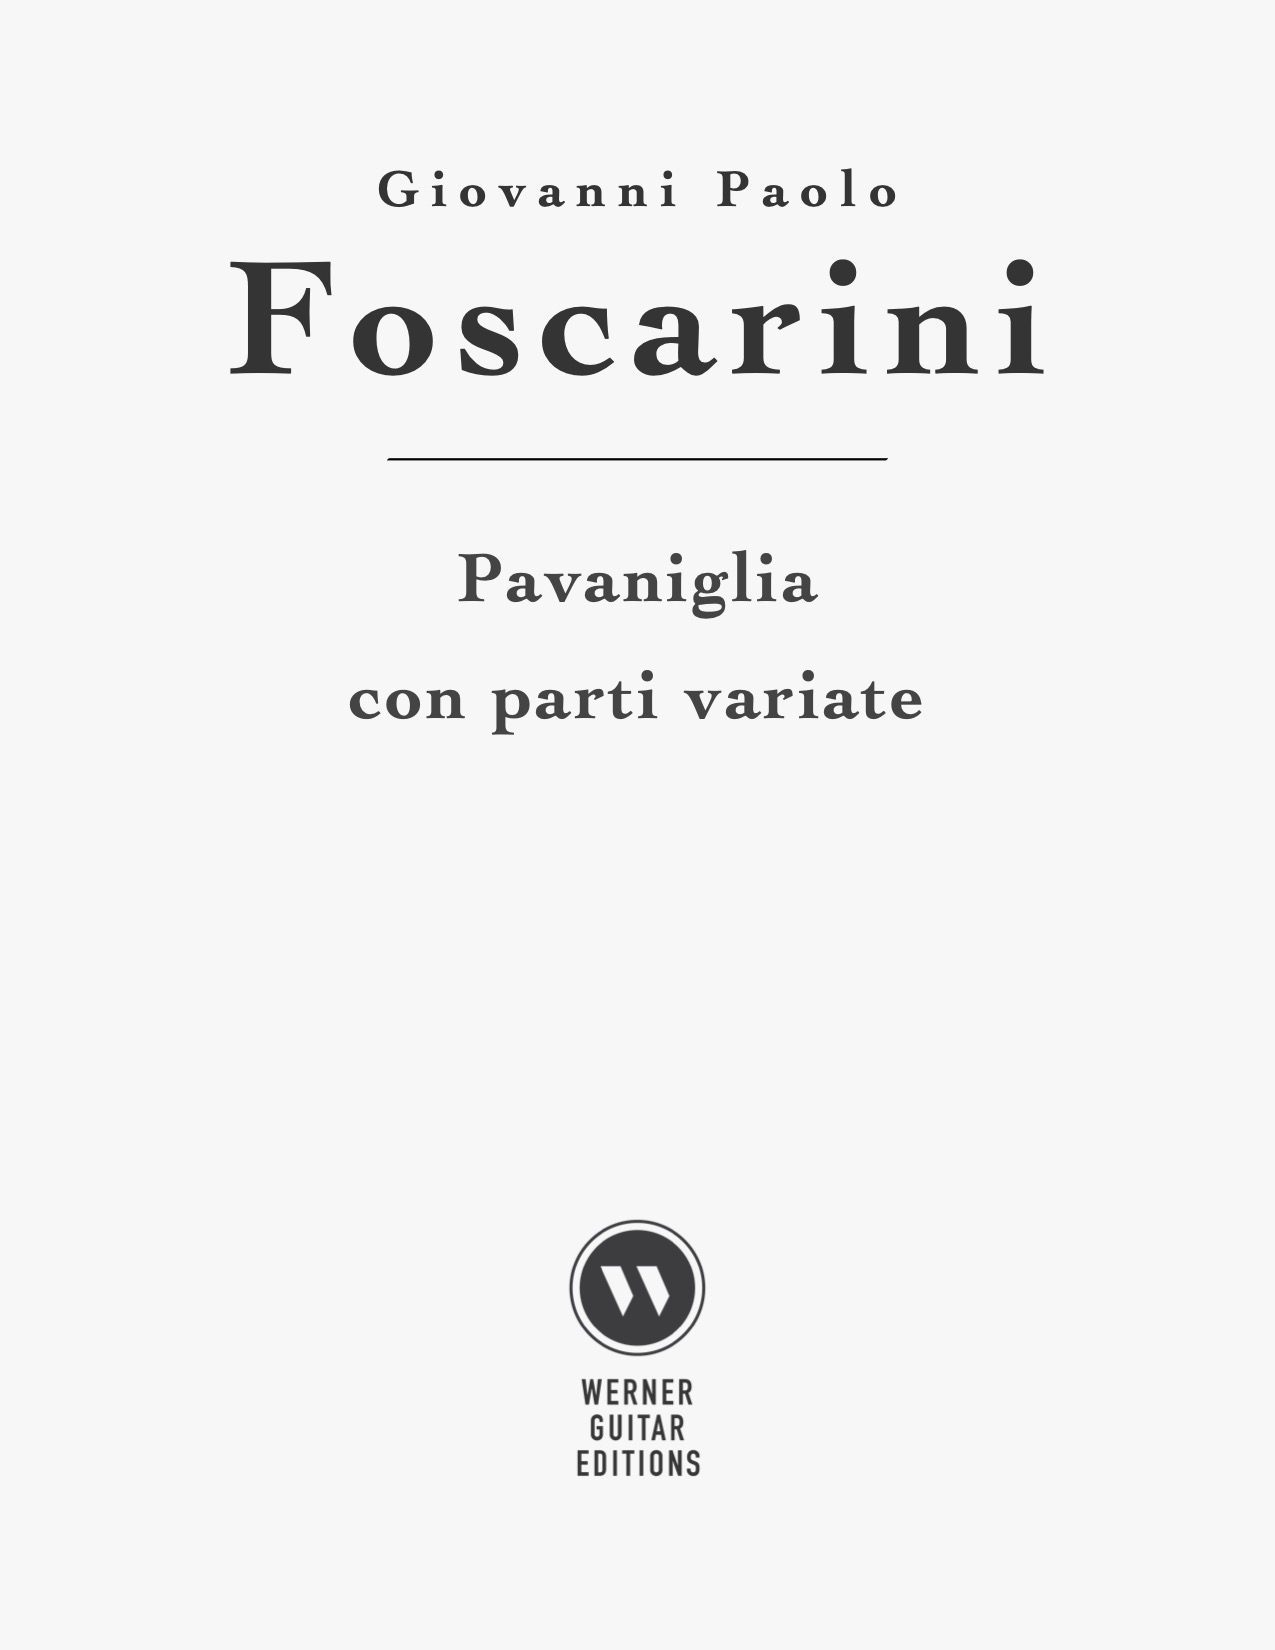 Pavaniglia con parti variate by Foscarini (PDF Sheet Music for Classical Guitar)